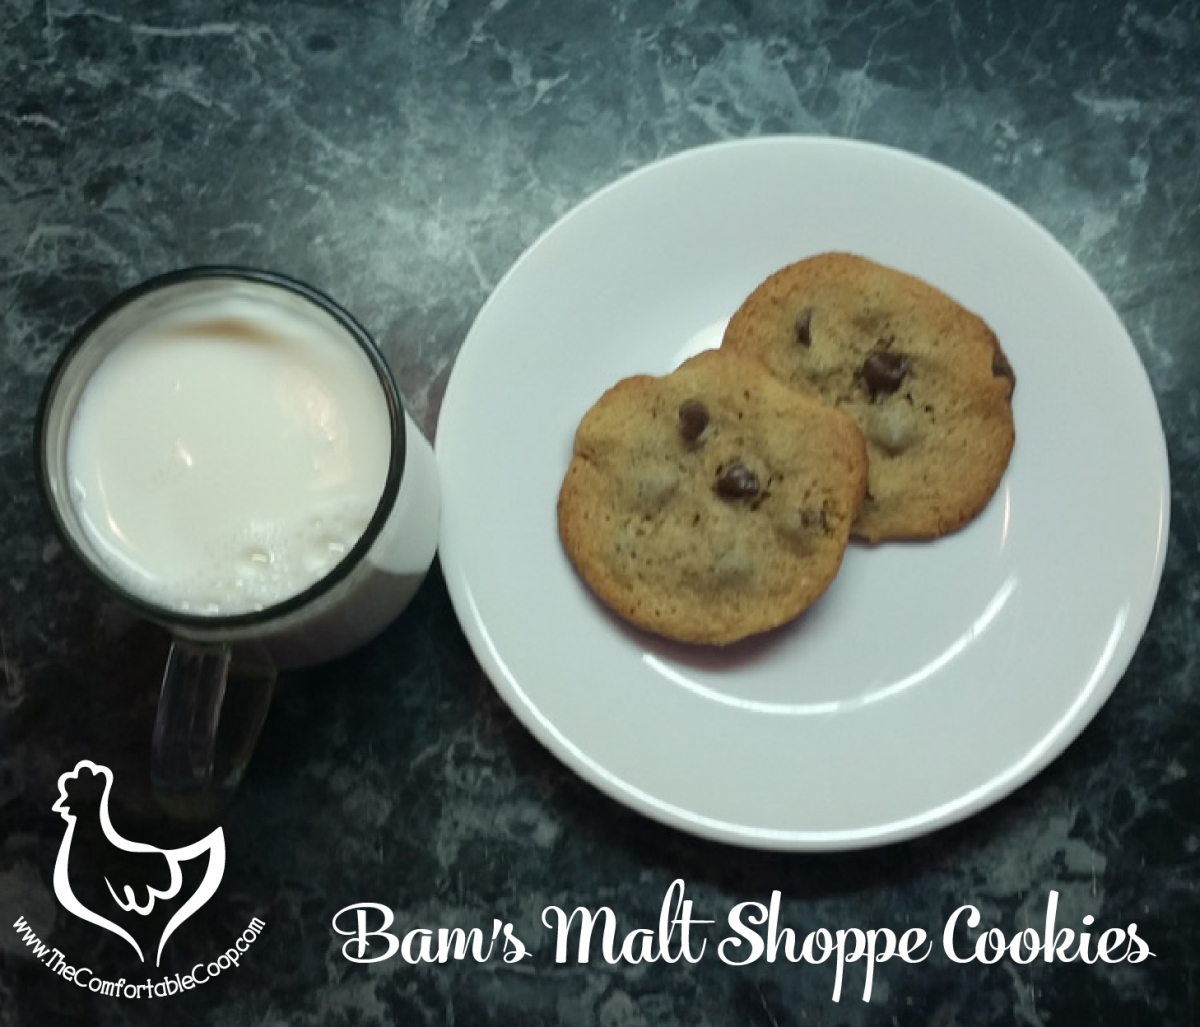 Bam’s Malt Shoppe Cookies